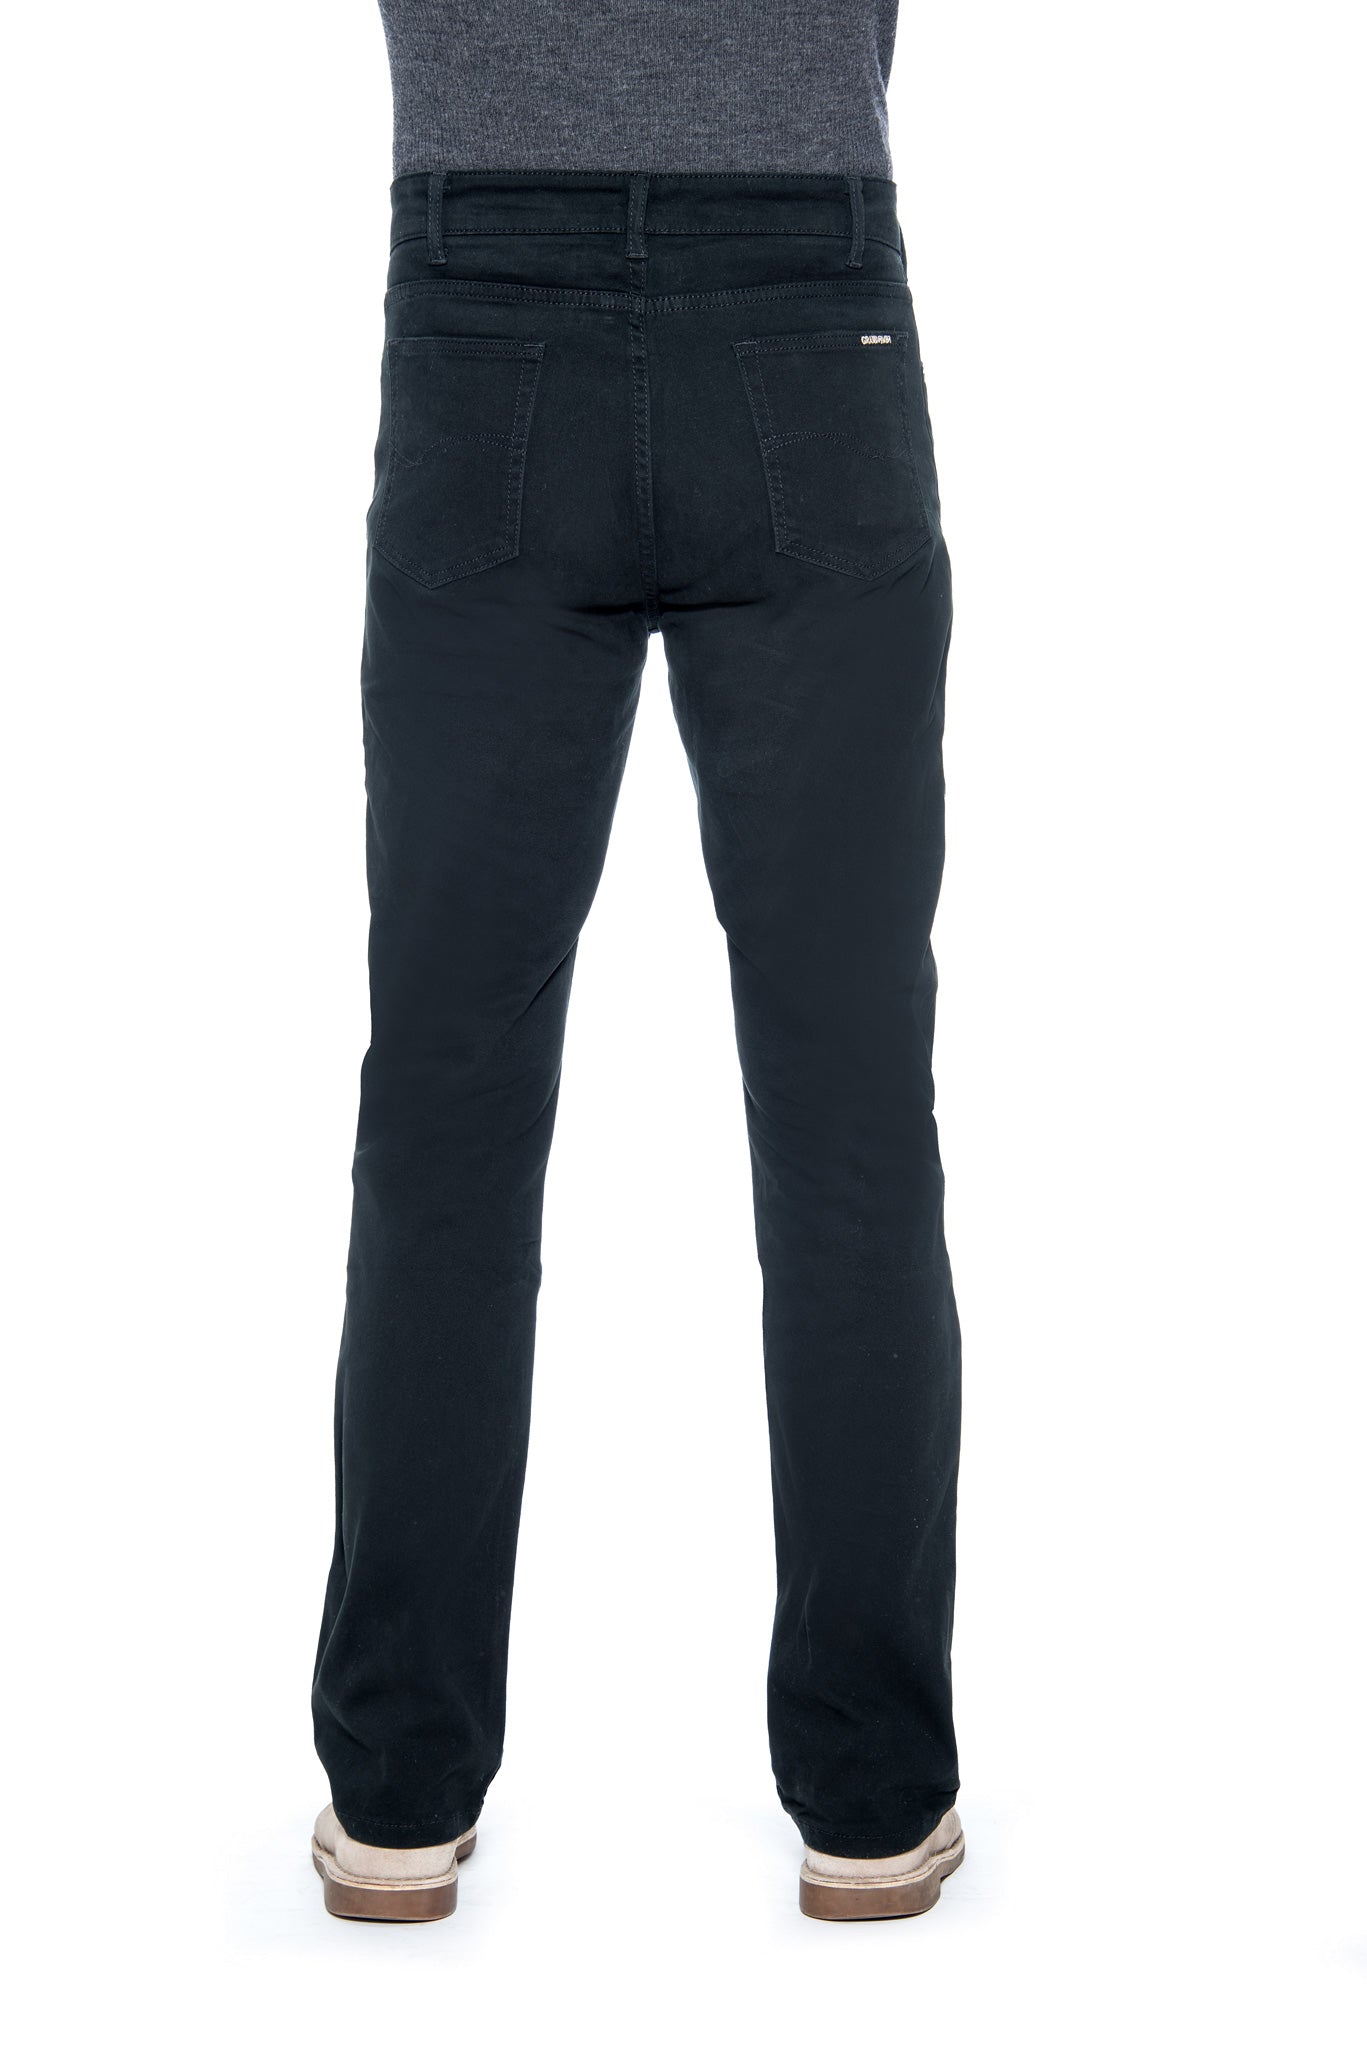 283BK - Black Lightweight Stretch Twill Pant – Grand River Clothing